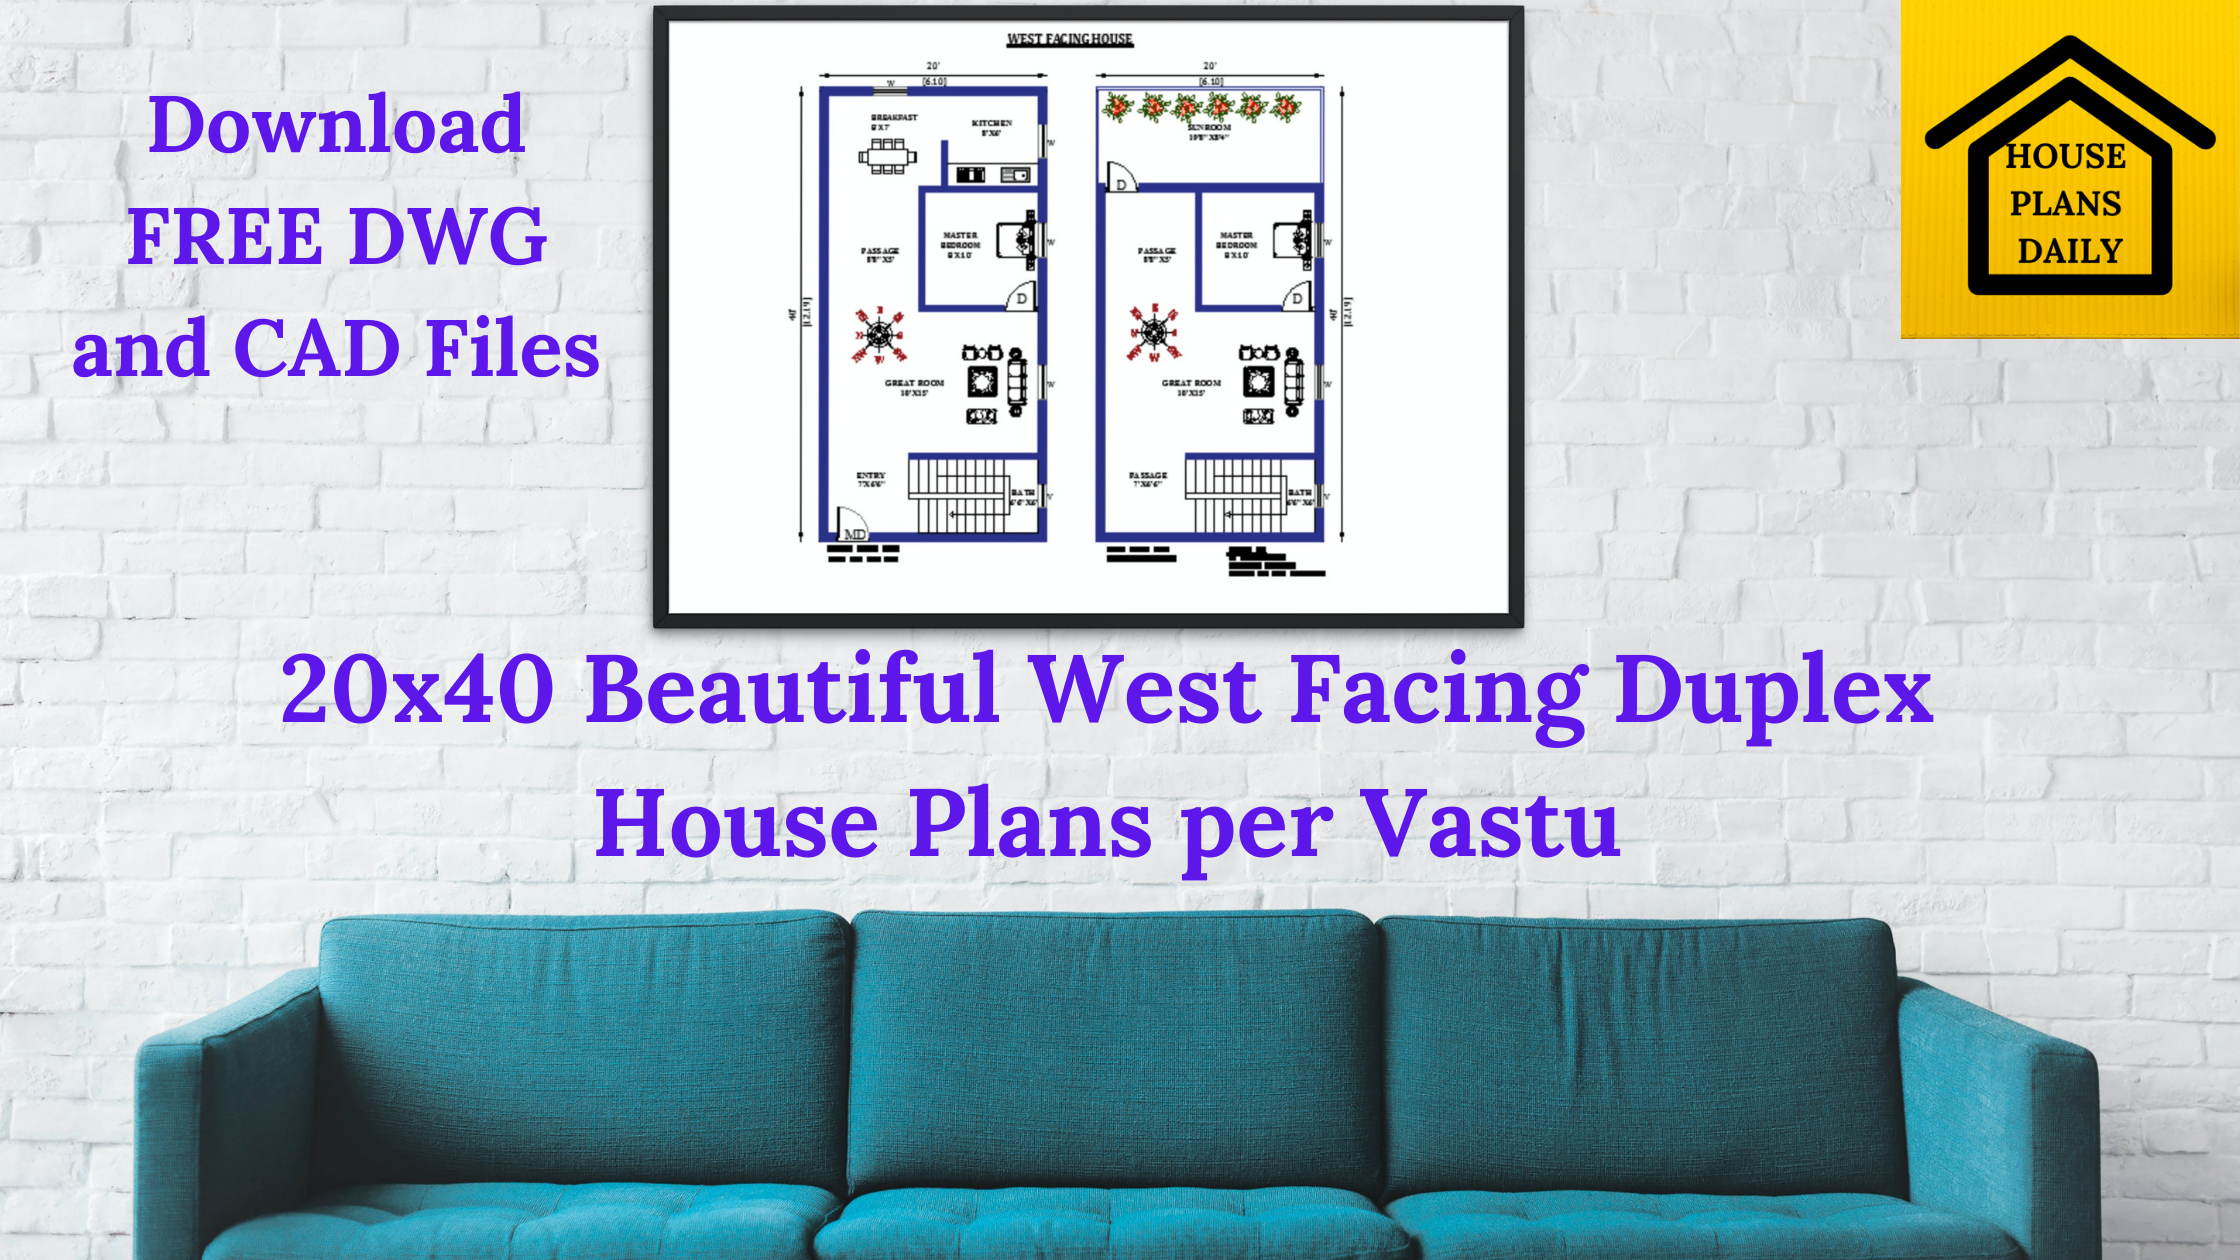 20x40 West Facing Duplex House Plans Per Vastu